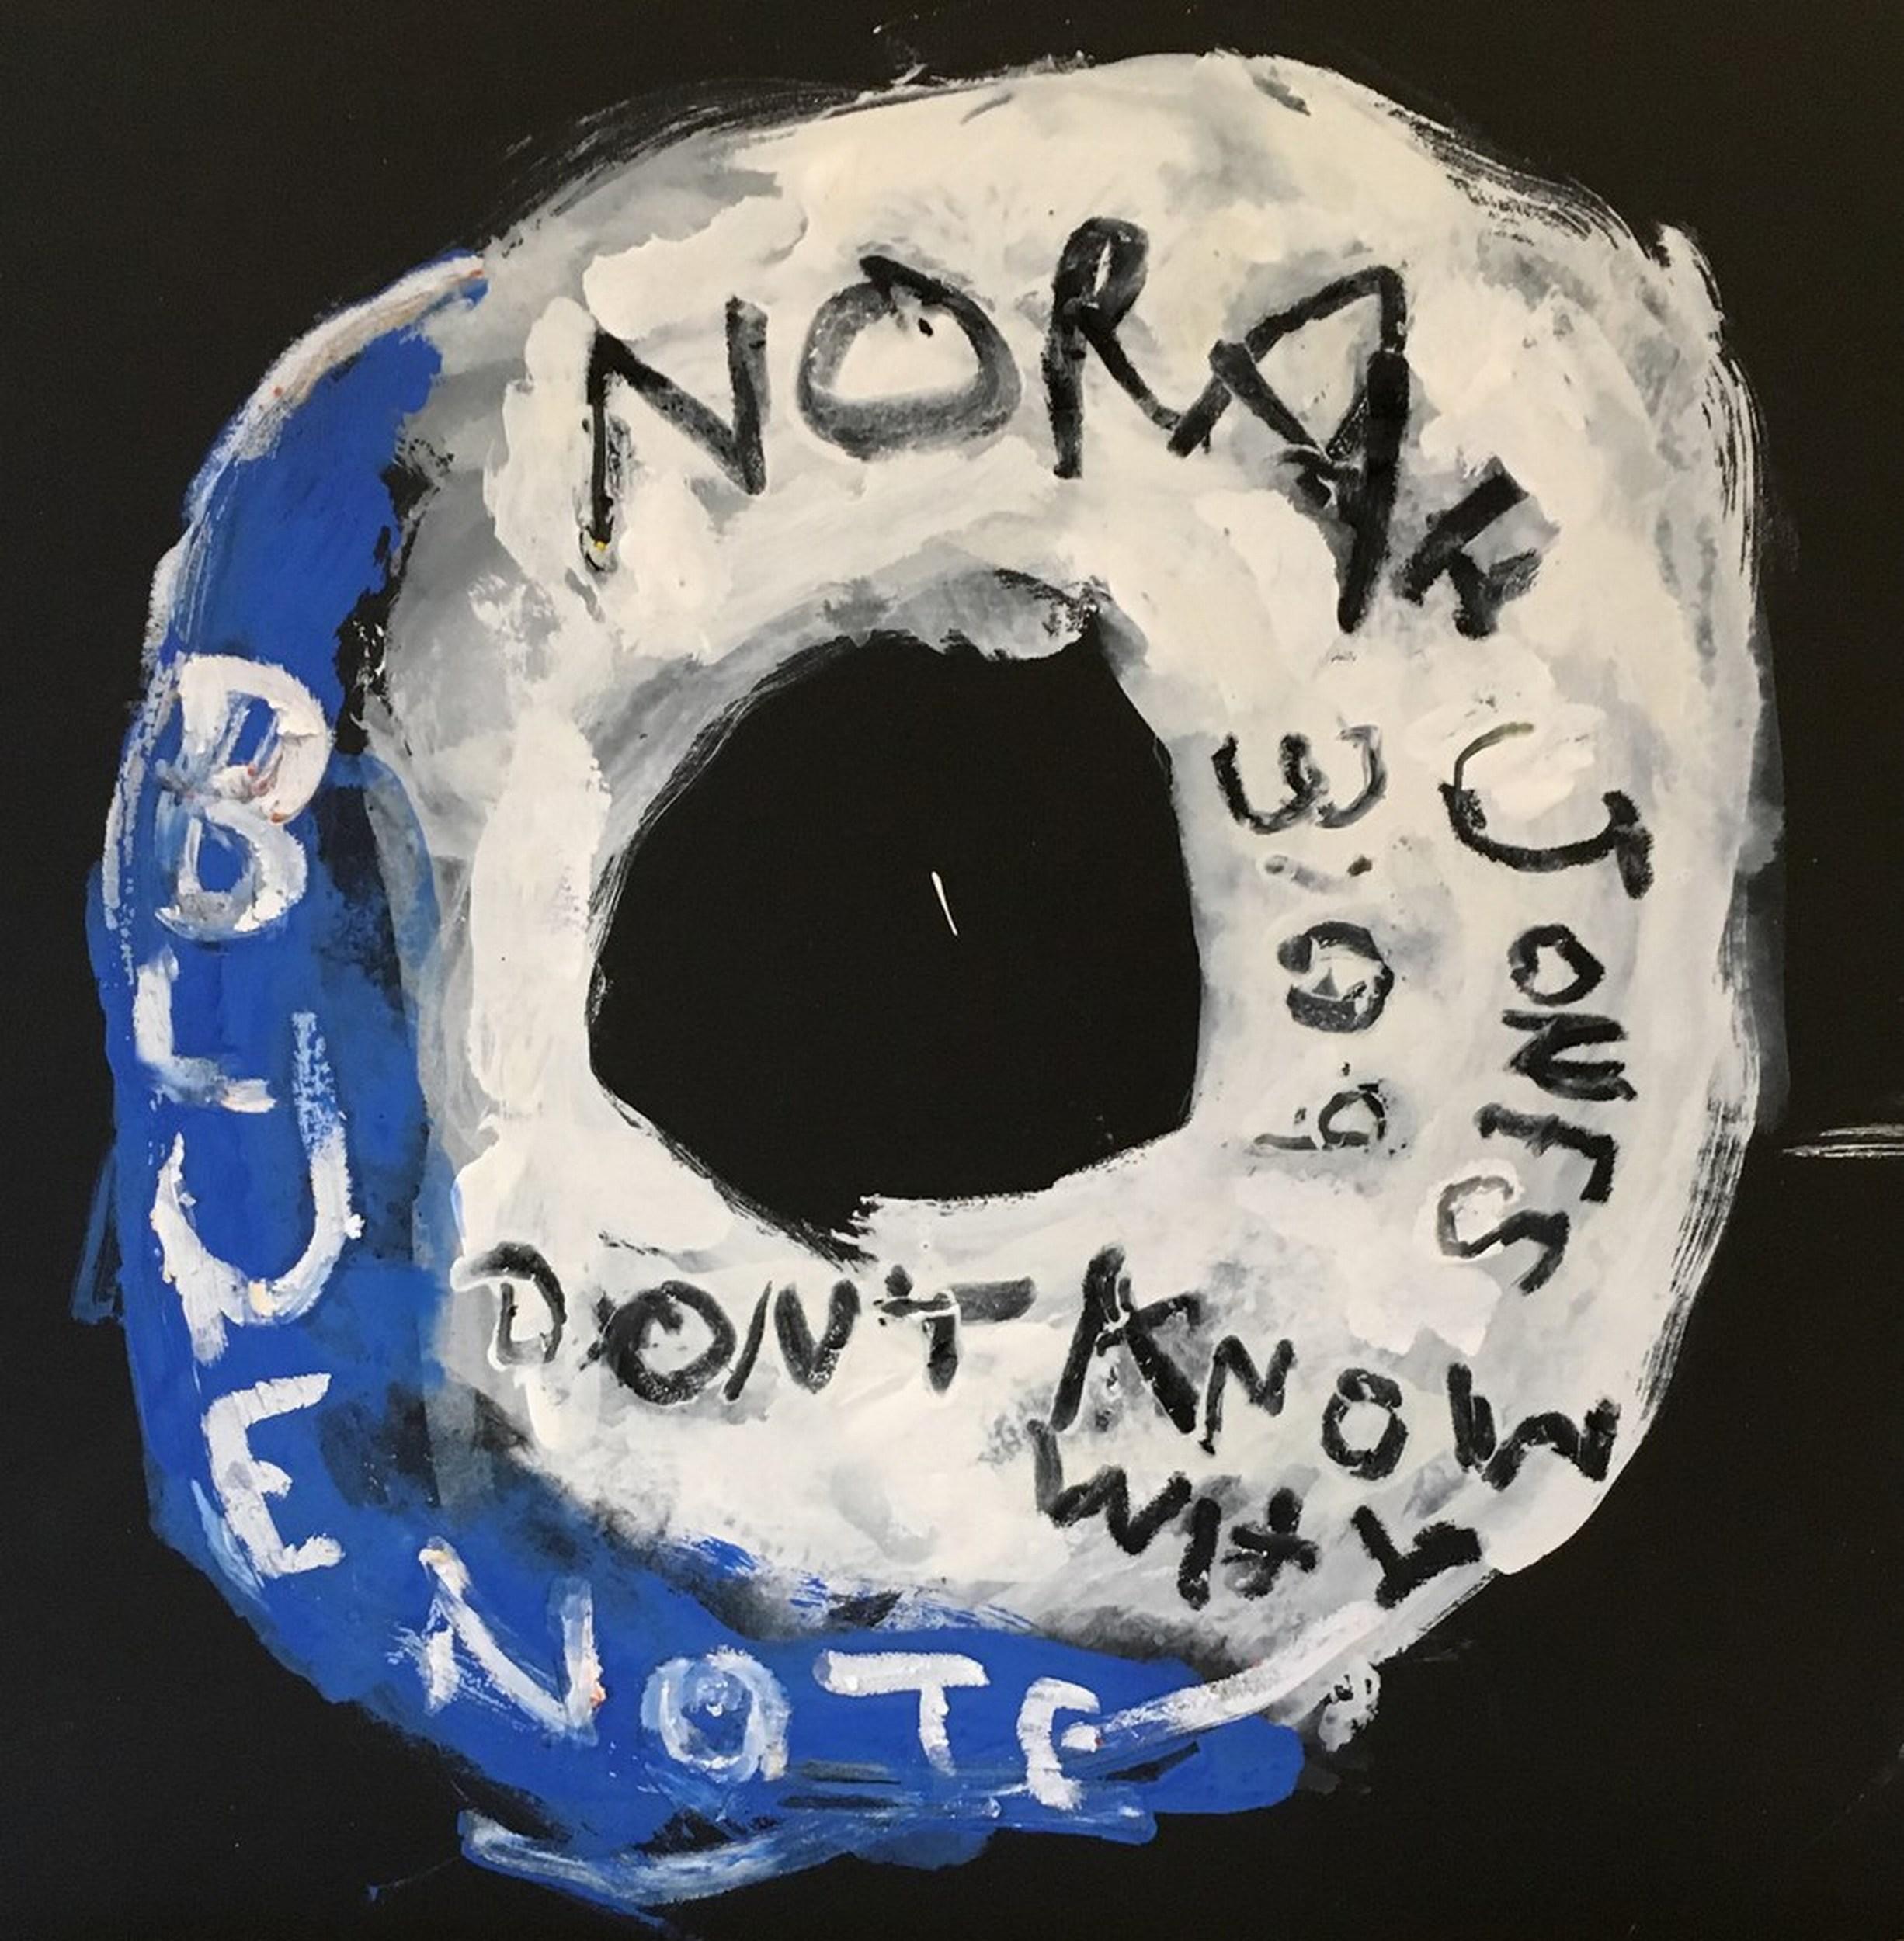 Norah Jones - Don't Know Why (Plattenlabel, Ticketabschnitte, Setlists, Pop Art)